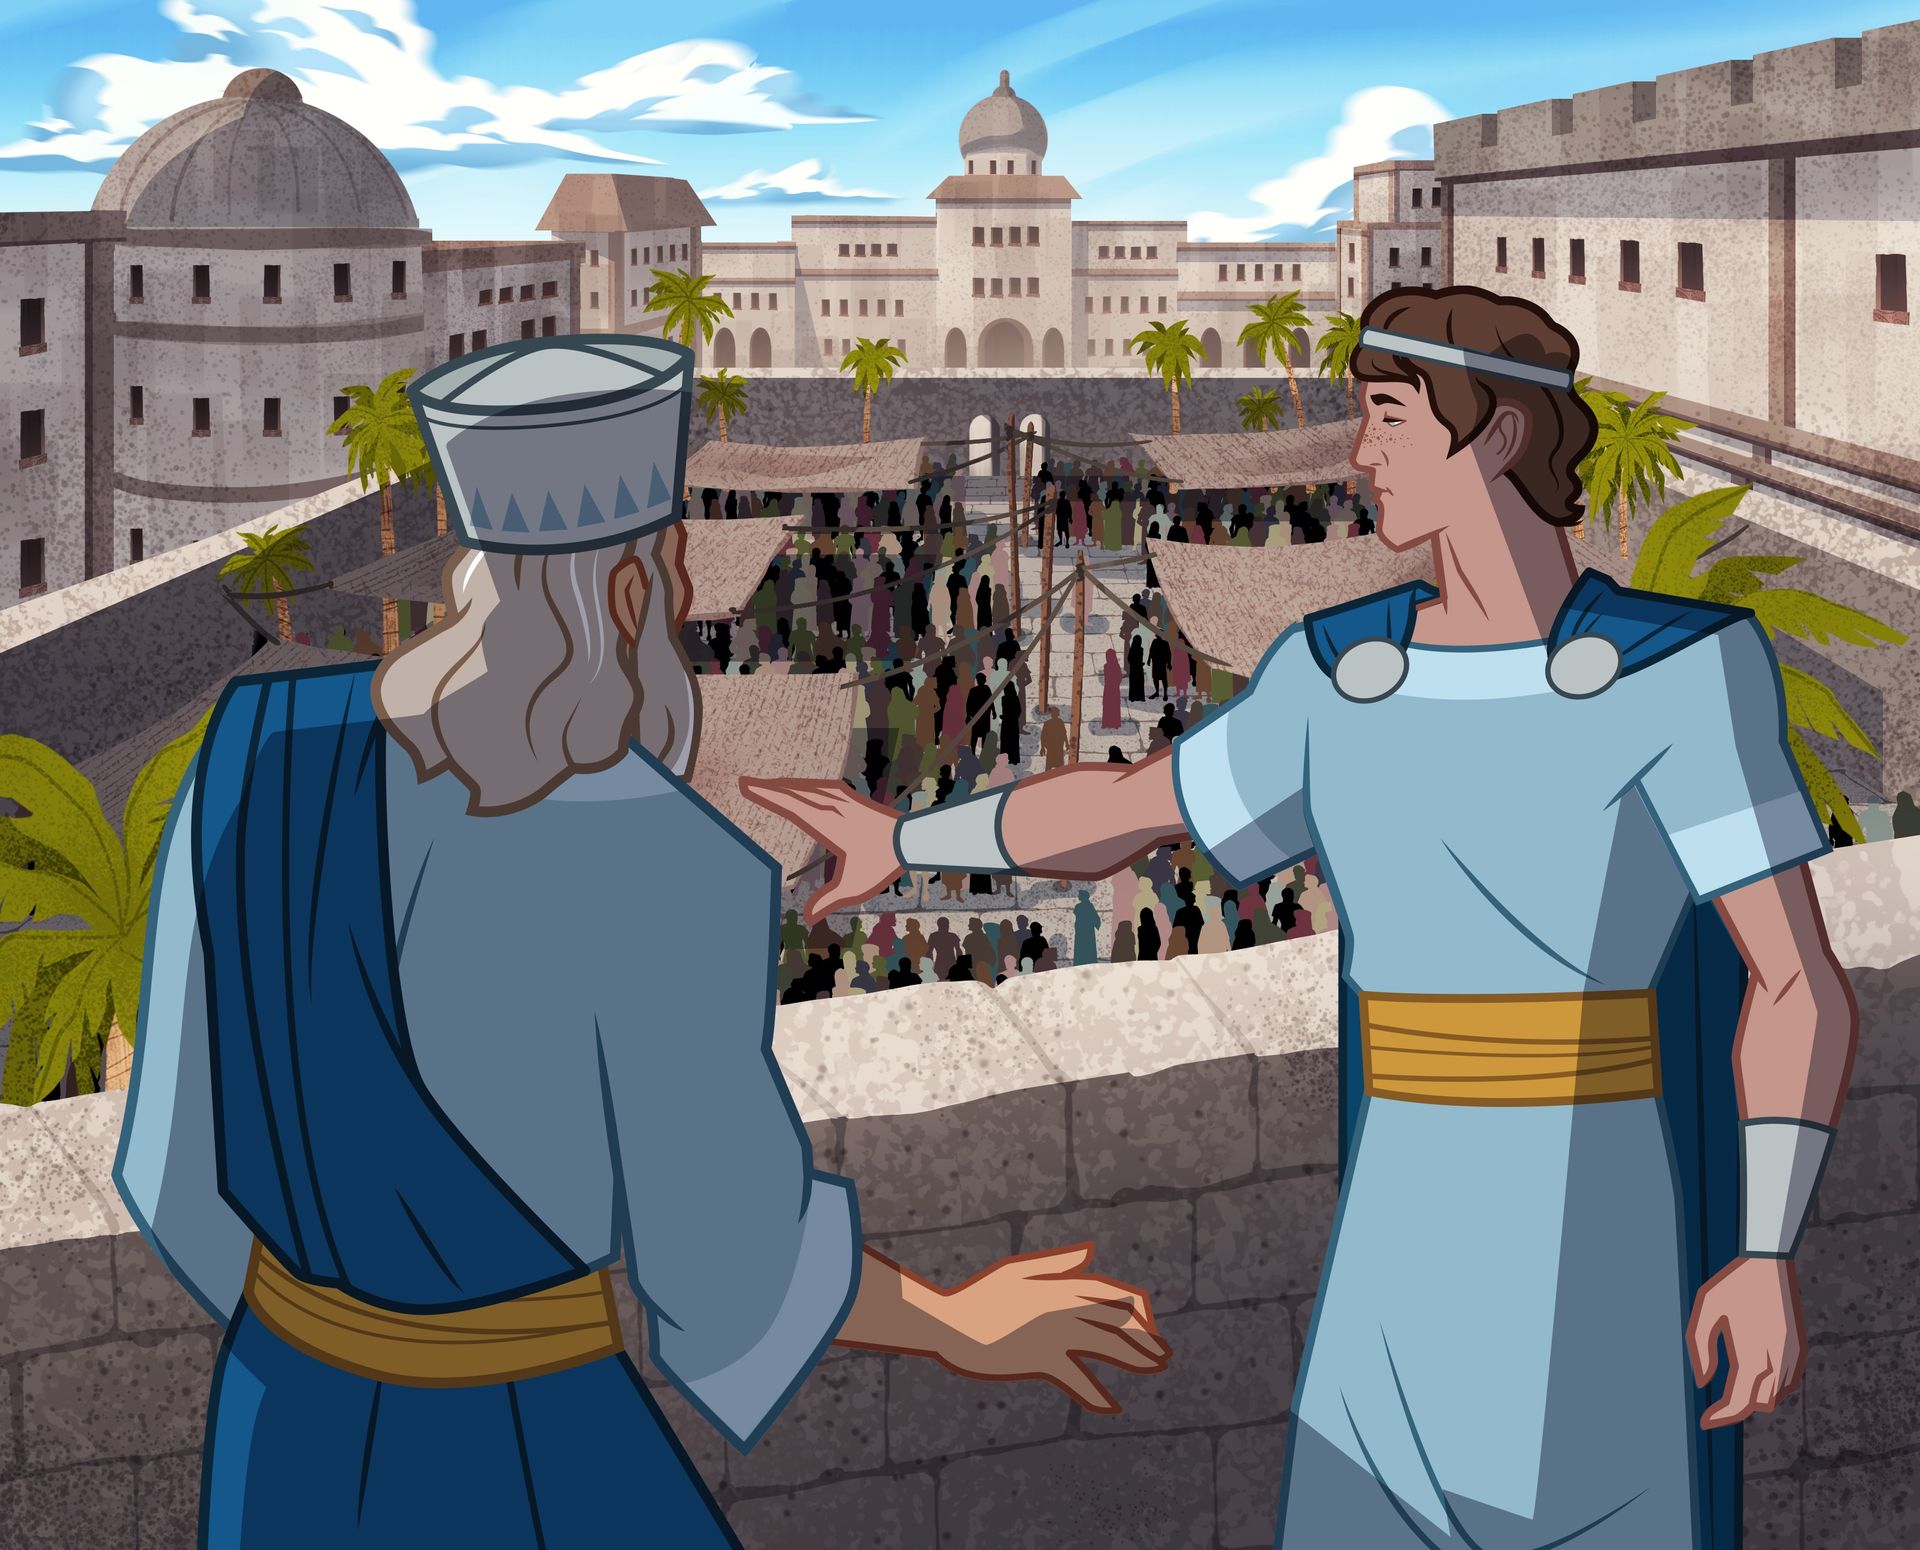 Illustration of King Saul and David looking at city. 1 Samuel 18:5